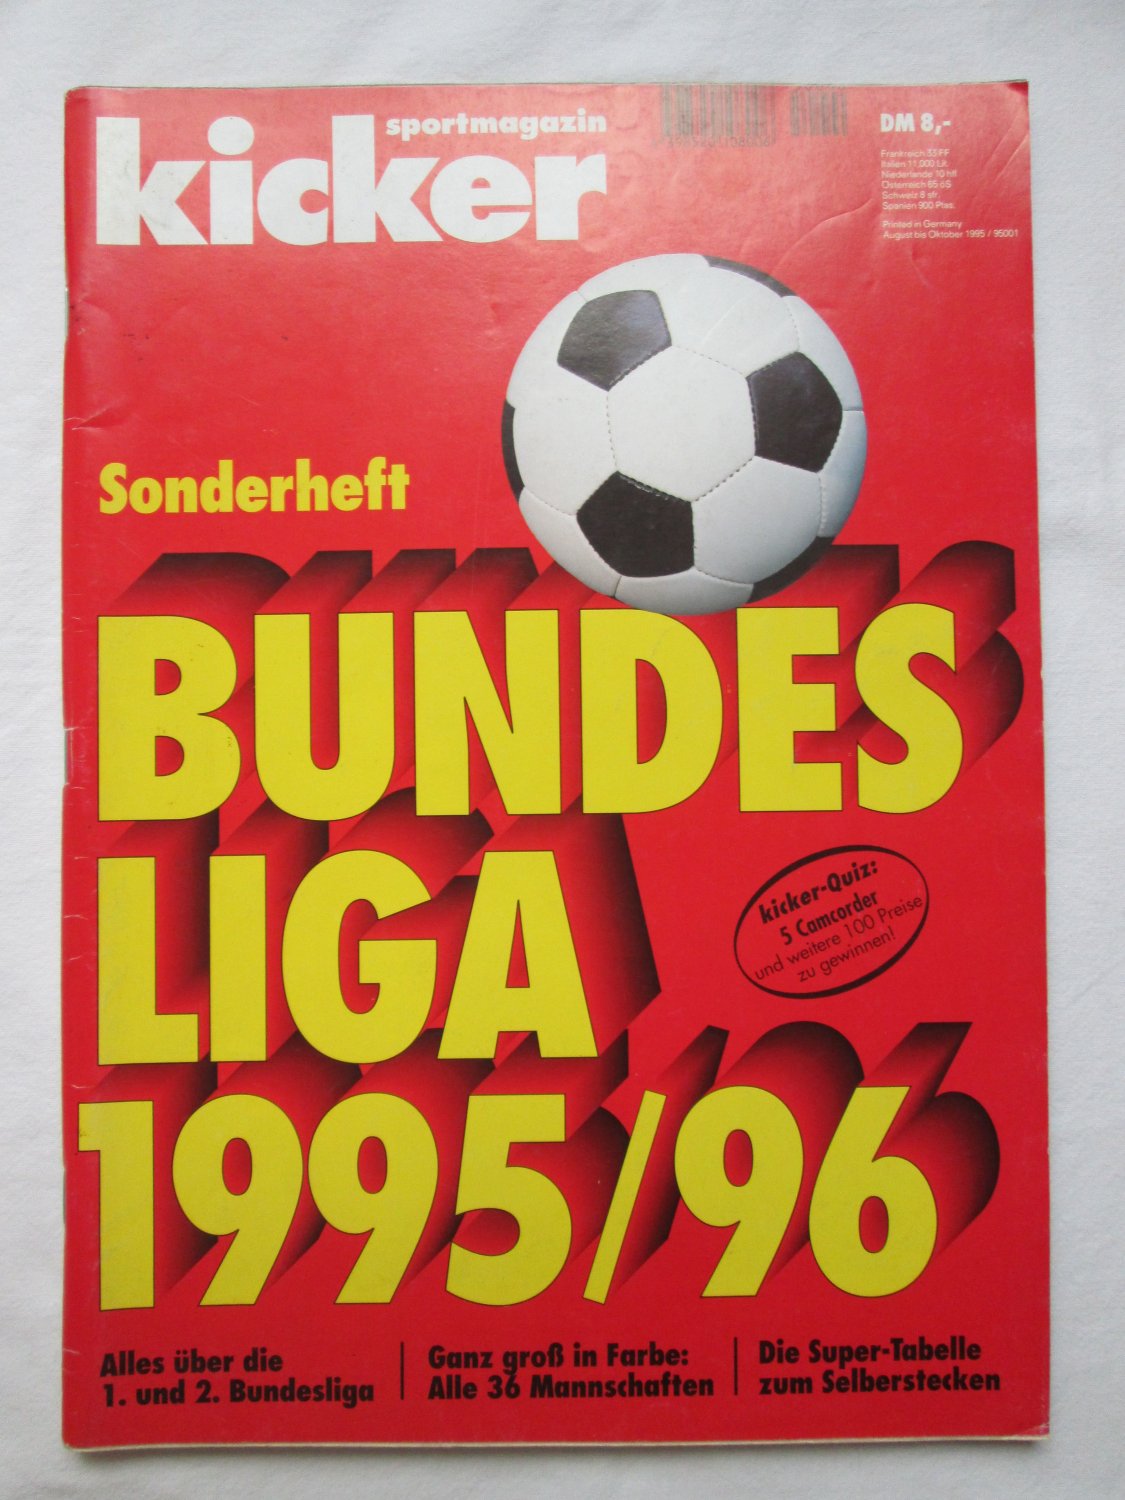 Kicker Sportmagazin Sonderheft Bundesliga 1995 96 Buch